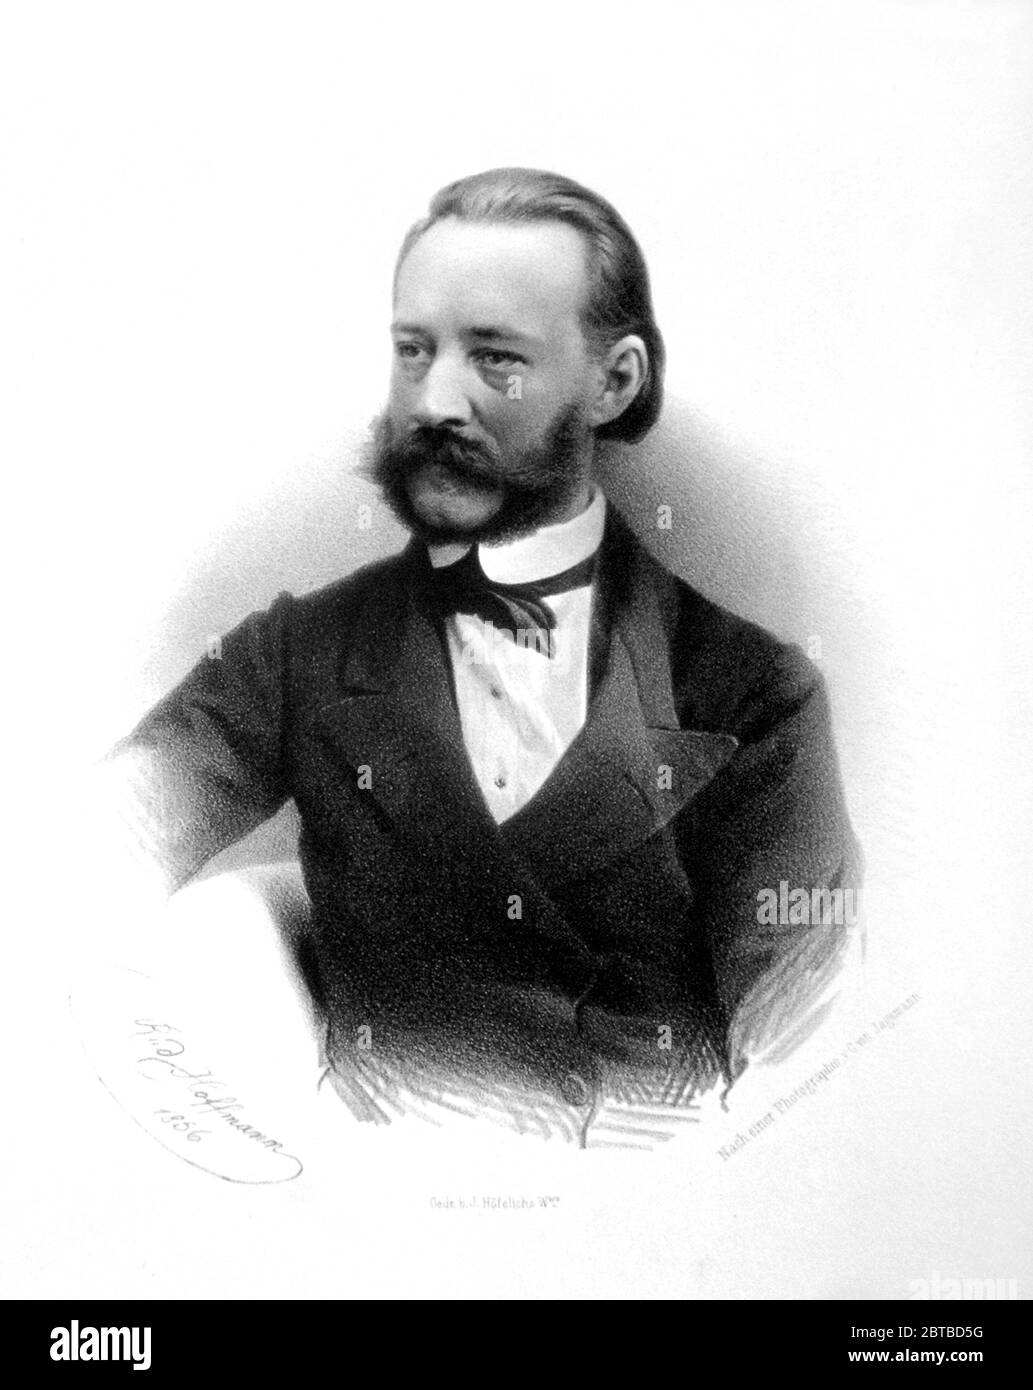 1856 , AUSTRIA :  The austrian chemist FRIEDRICH ROCHLEDER ( 1819 - 1874 ). Portrait engraved by Rudolf Hoffmann ( 1820 - 1882 ) . - HISTORY  - foto storiche - foto storica  - scienziato - scientist  - portrait - ritratto - SCIENZA - SCIENCE  - CHIMICA - CHEMISTRY -  baffi - moustache - beard - barba - paillon - tie bow - cravatta - incisione - engraving - illustrazione - illustration ---  Archivio GBB Stock Photo